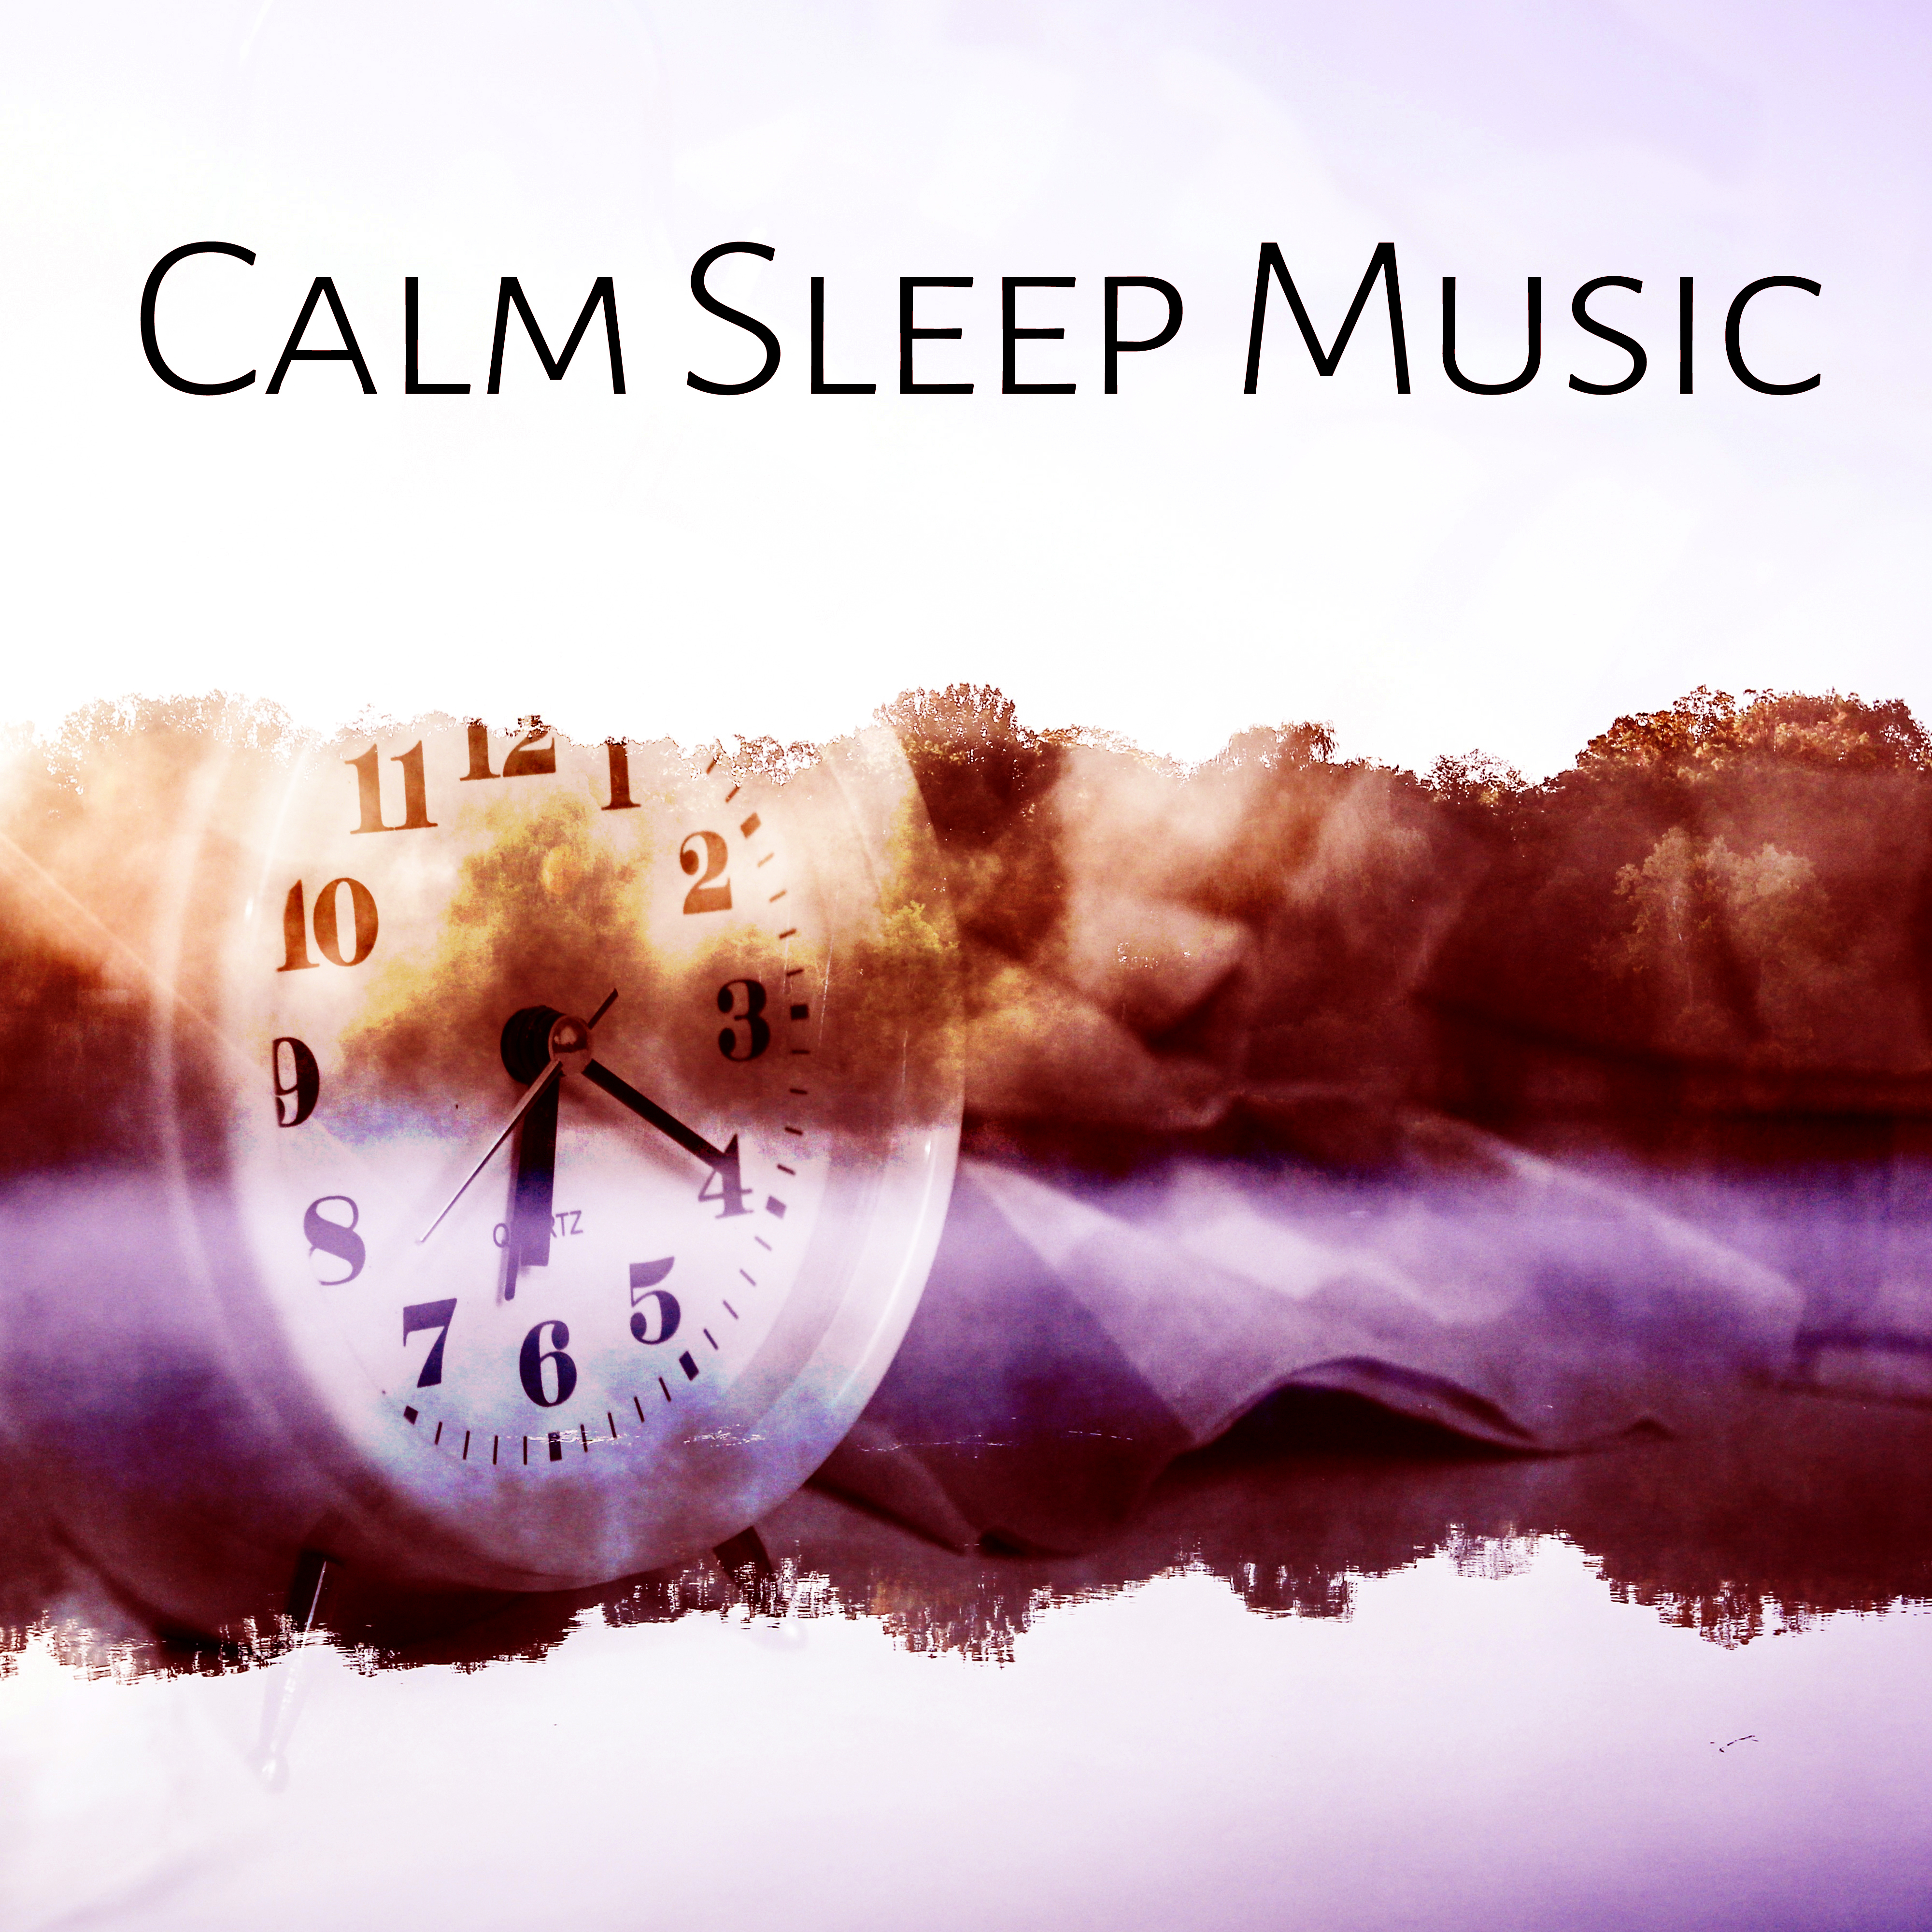 Calm Sleep Music  Music Before Sleep, Calmness, Peaceful Music, Deep Sleep, Nature Recovery